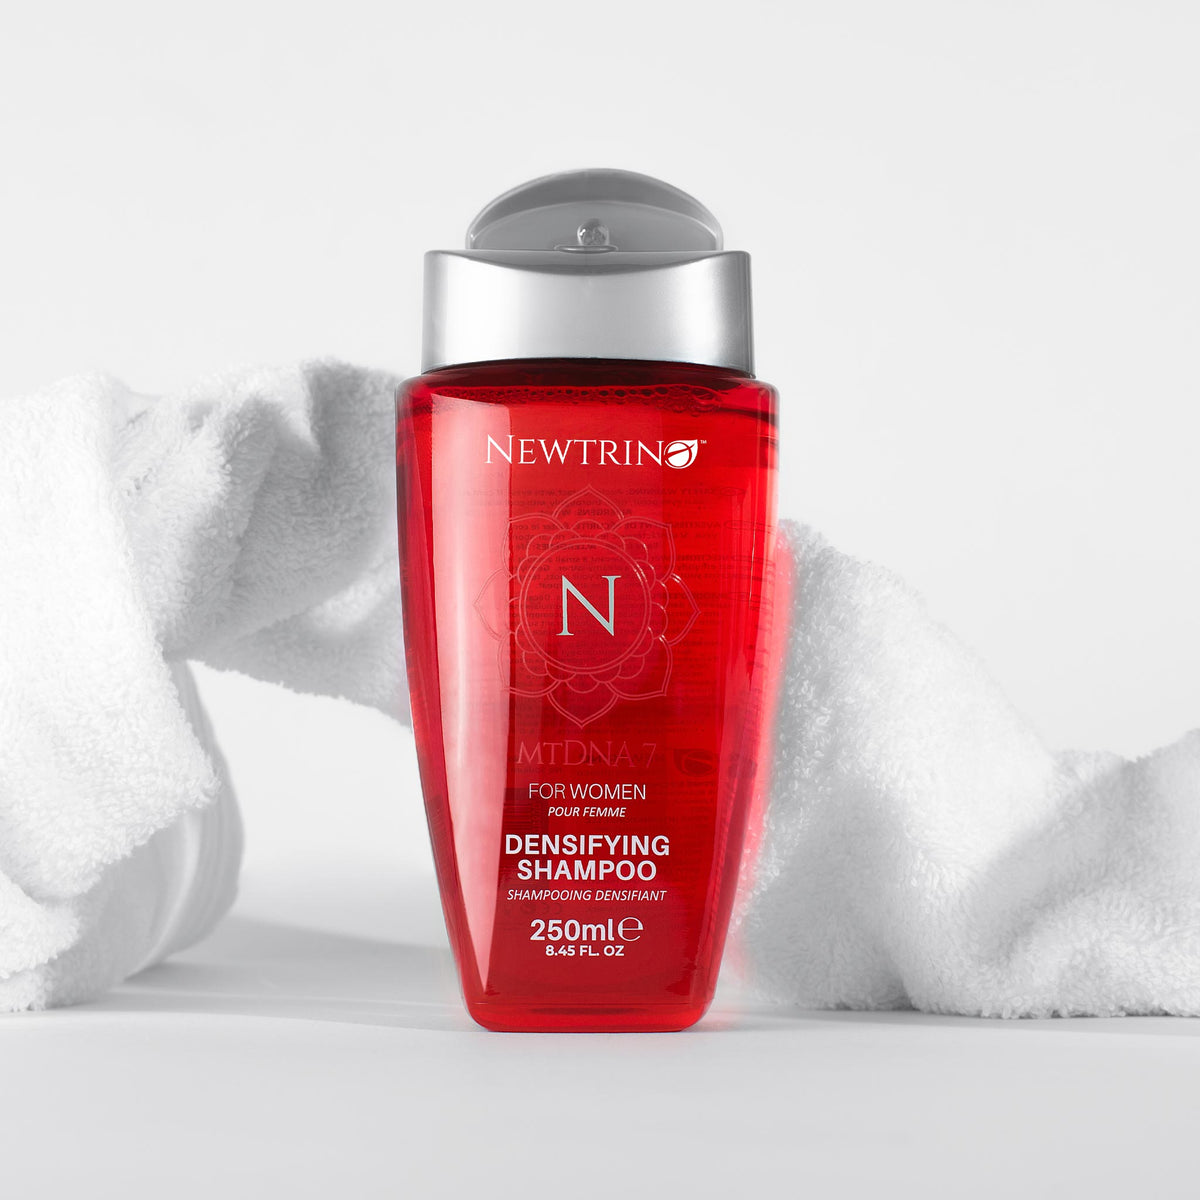 Newtrino MtDNA 7 Densifying Shampoo For Women 250ml